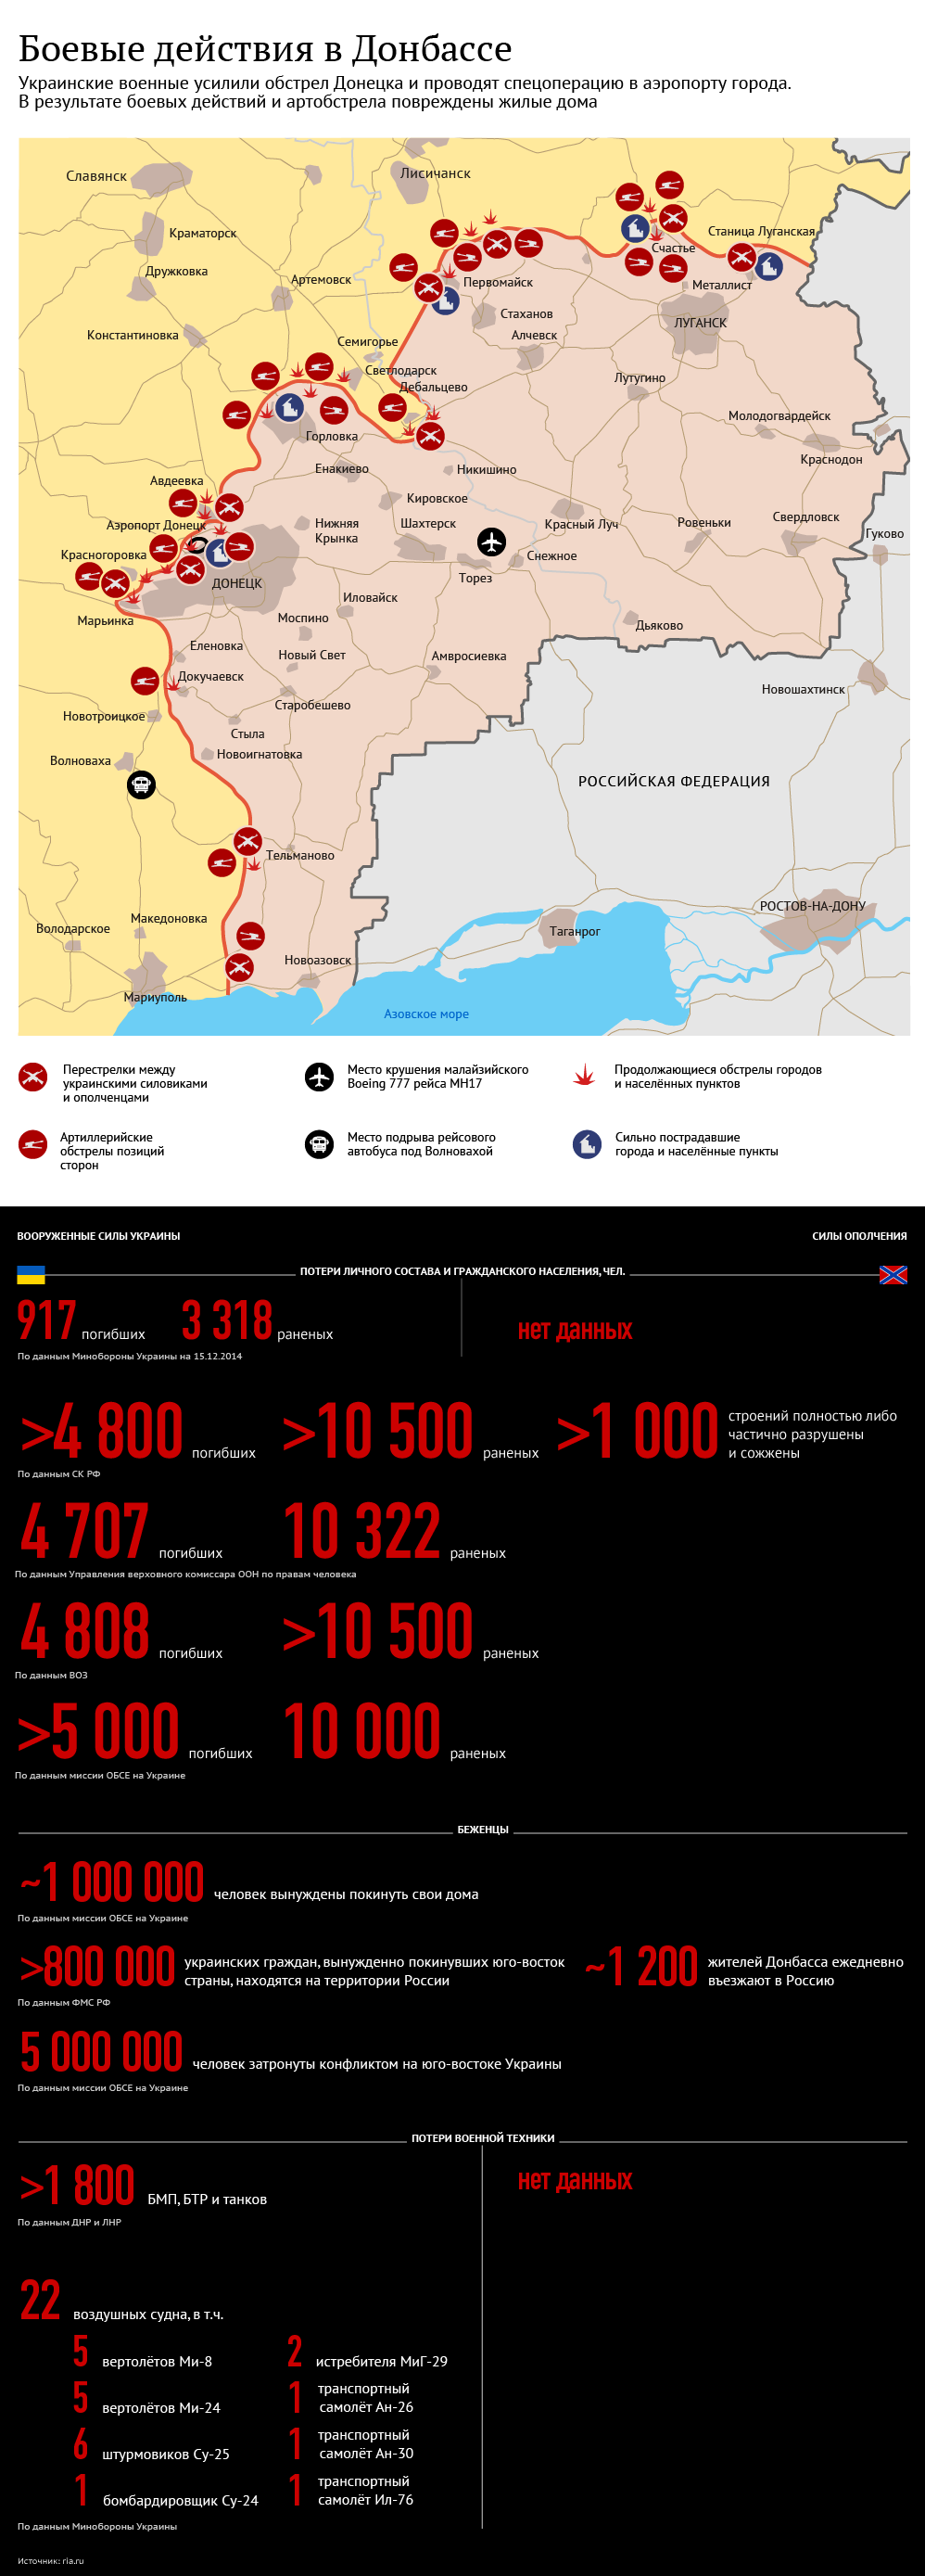 Боевые действия в Донбассе